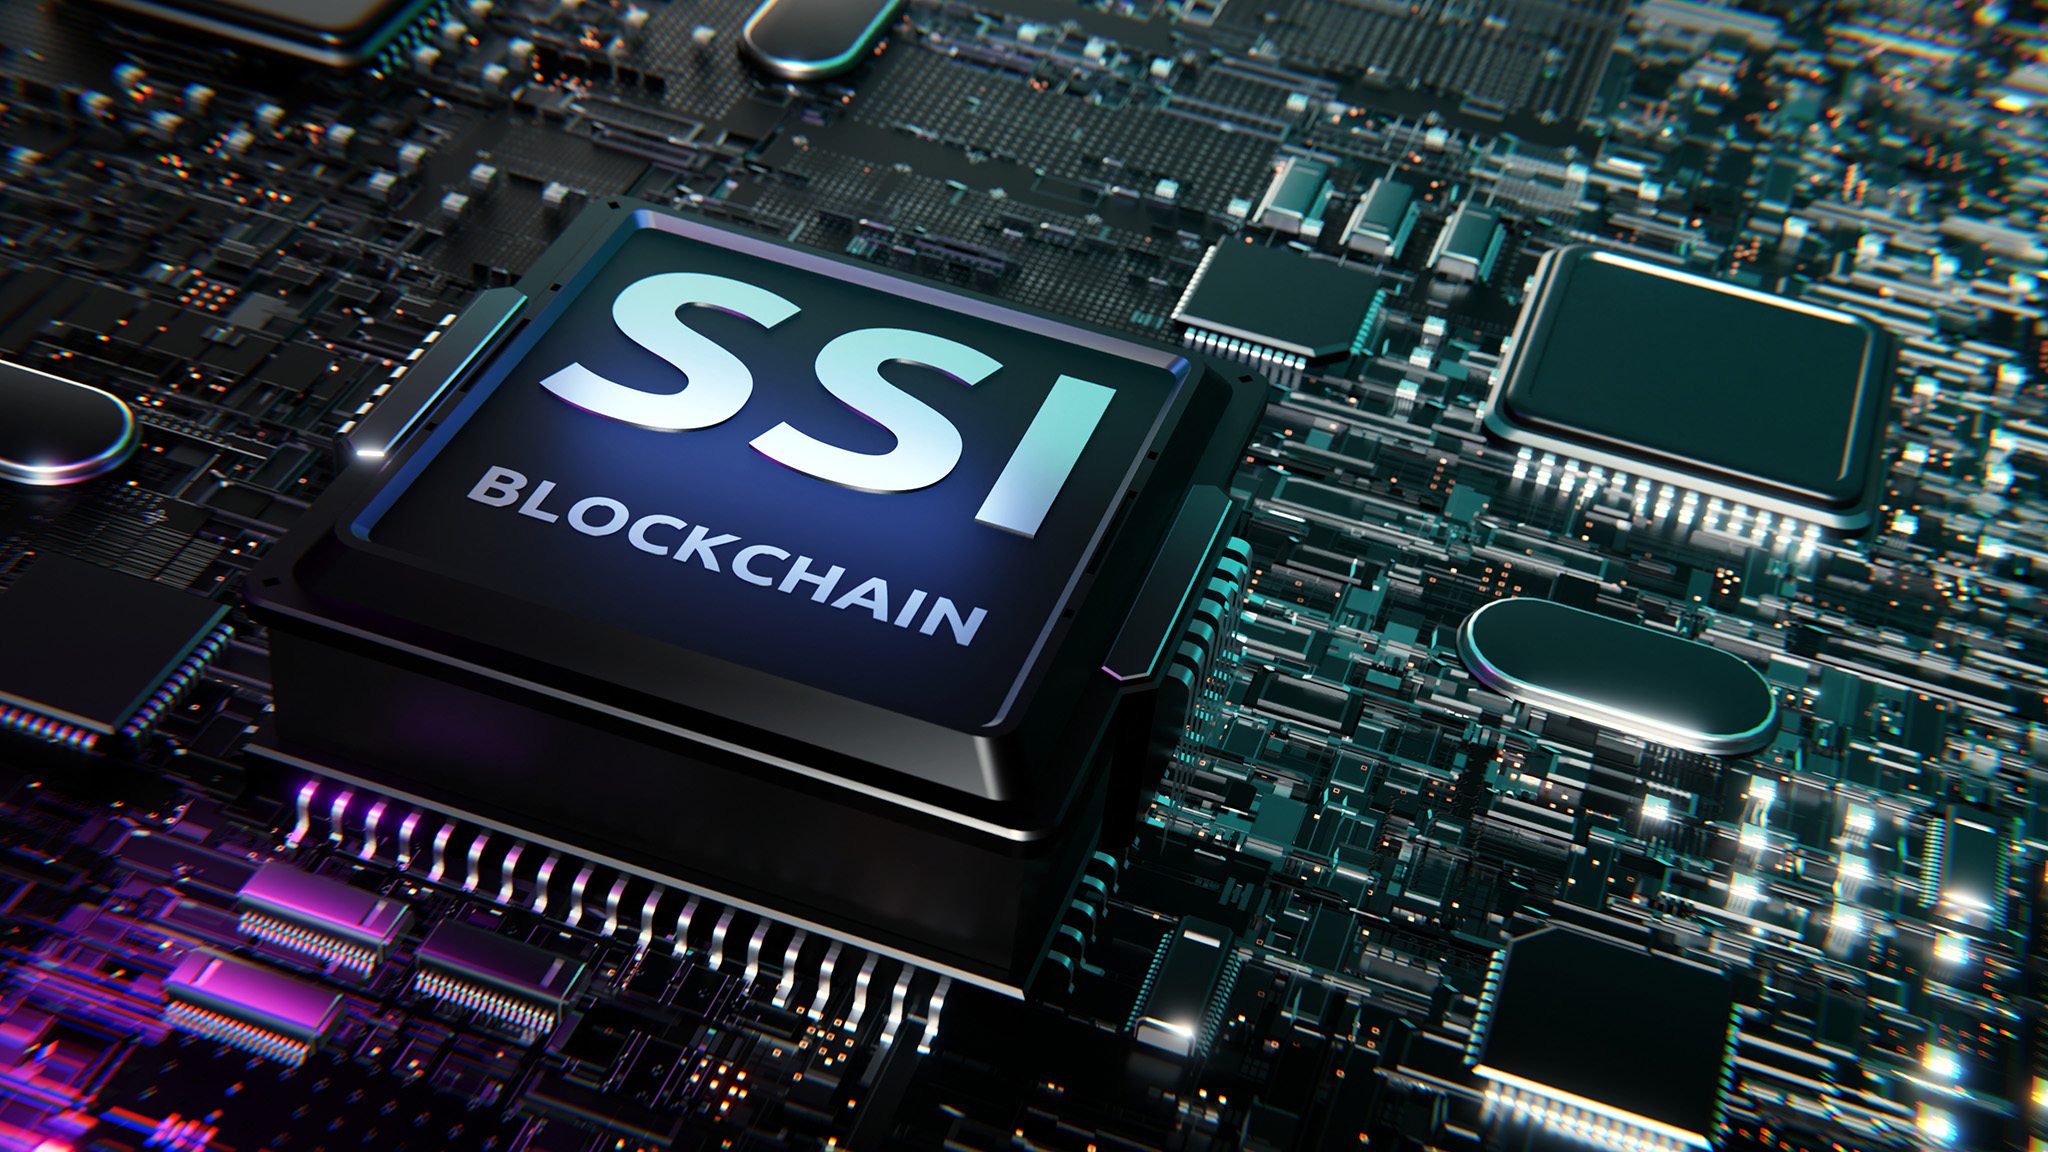 SSI Blockchain